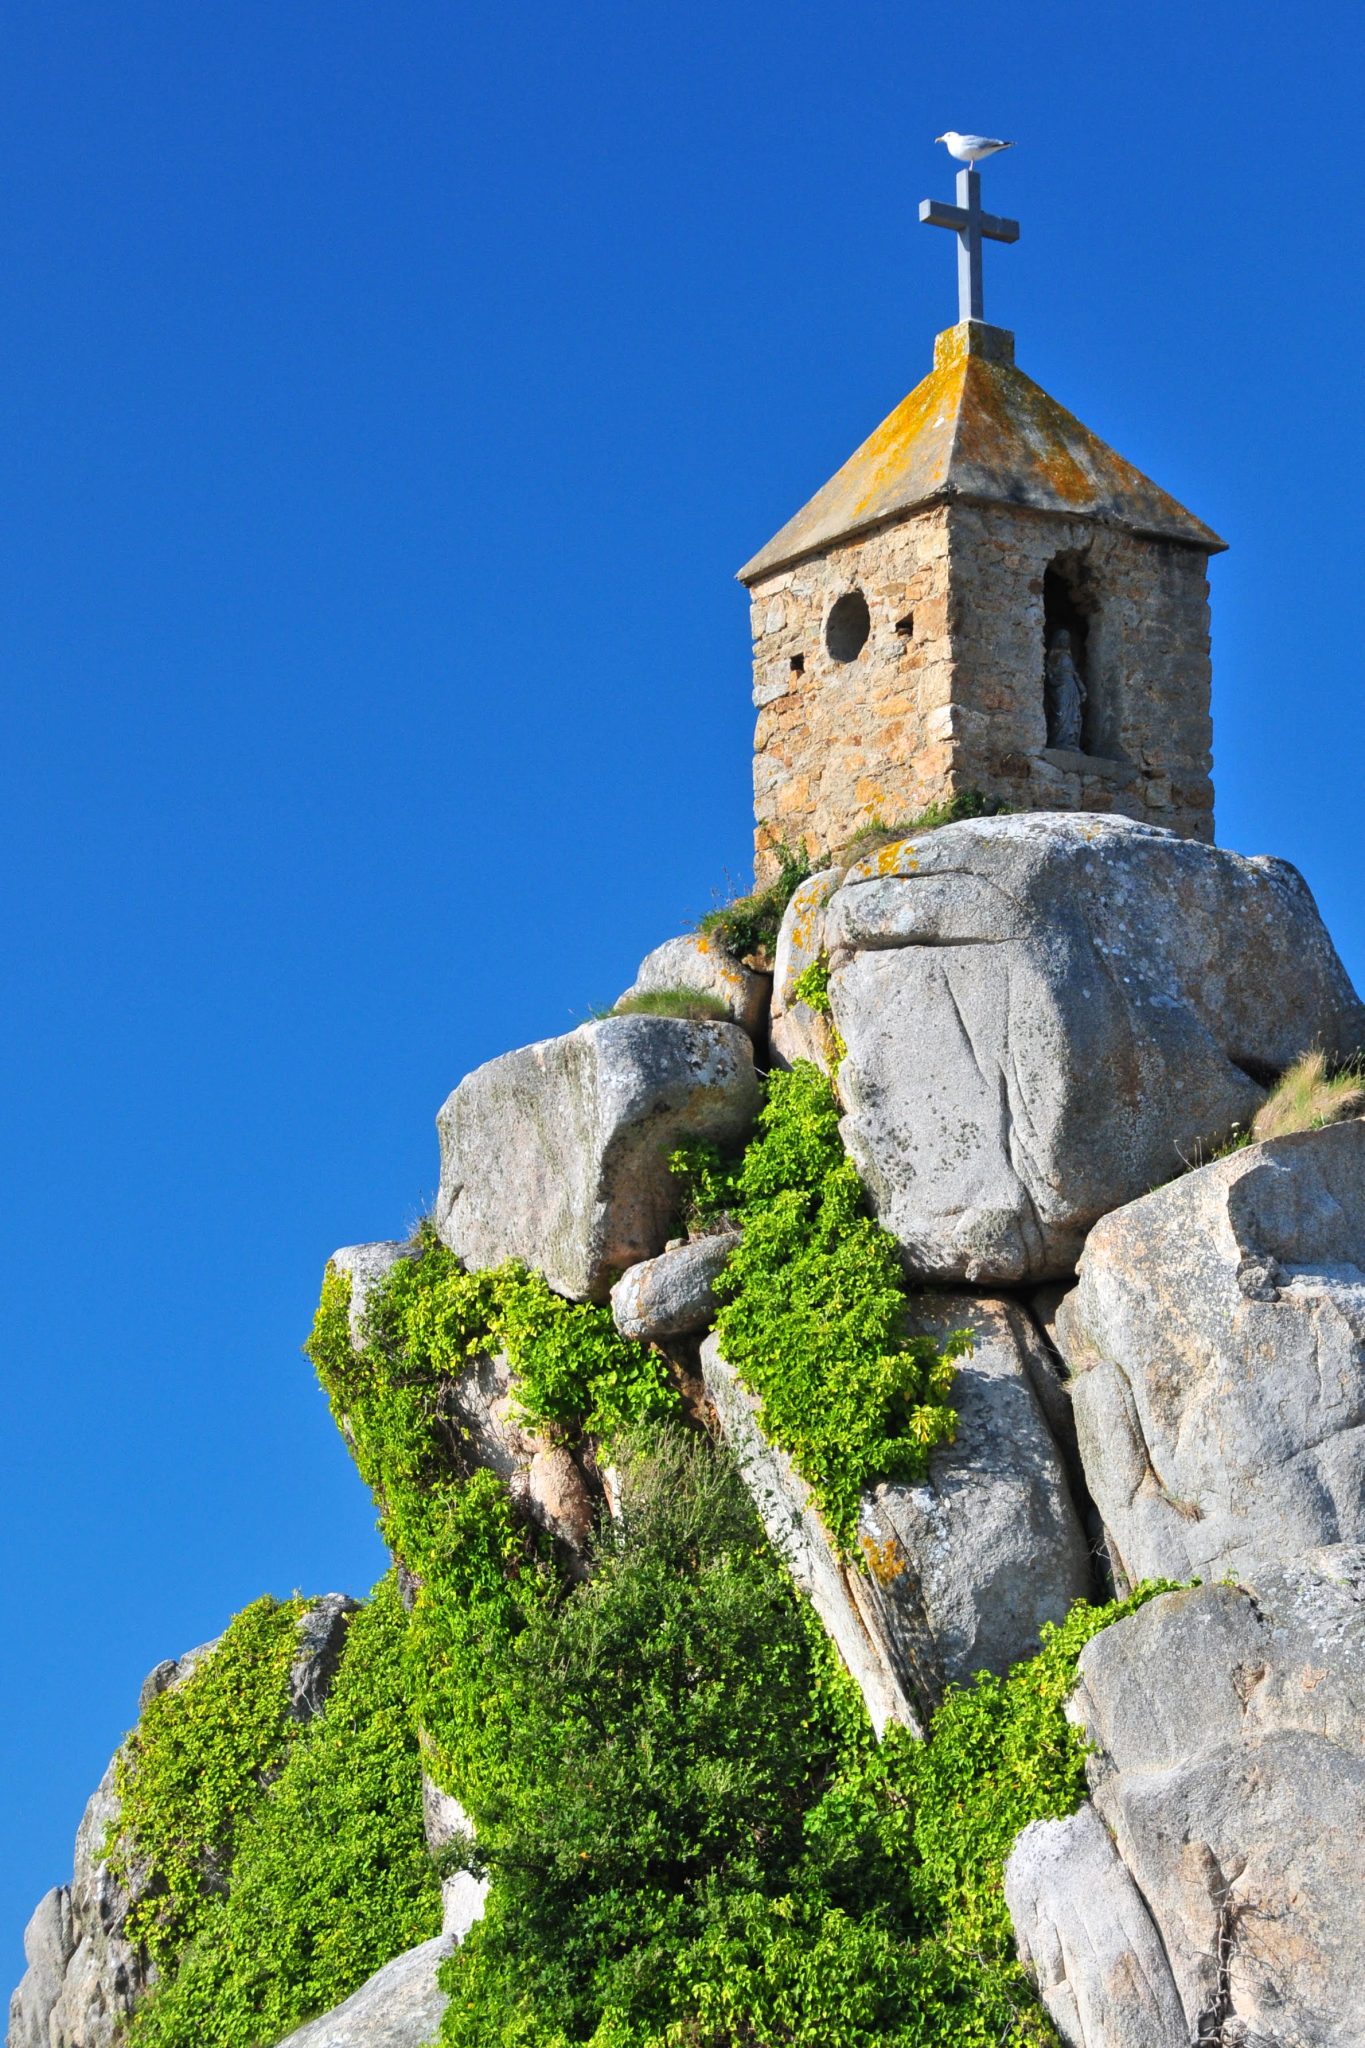 Watchtower, Rocher de la Sentinelle, France